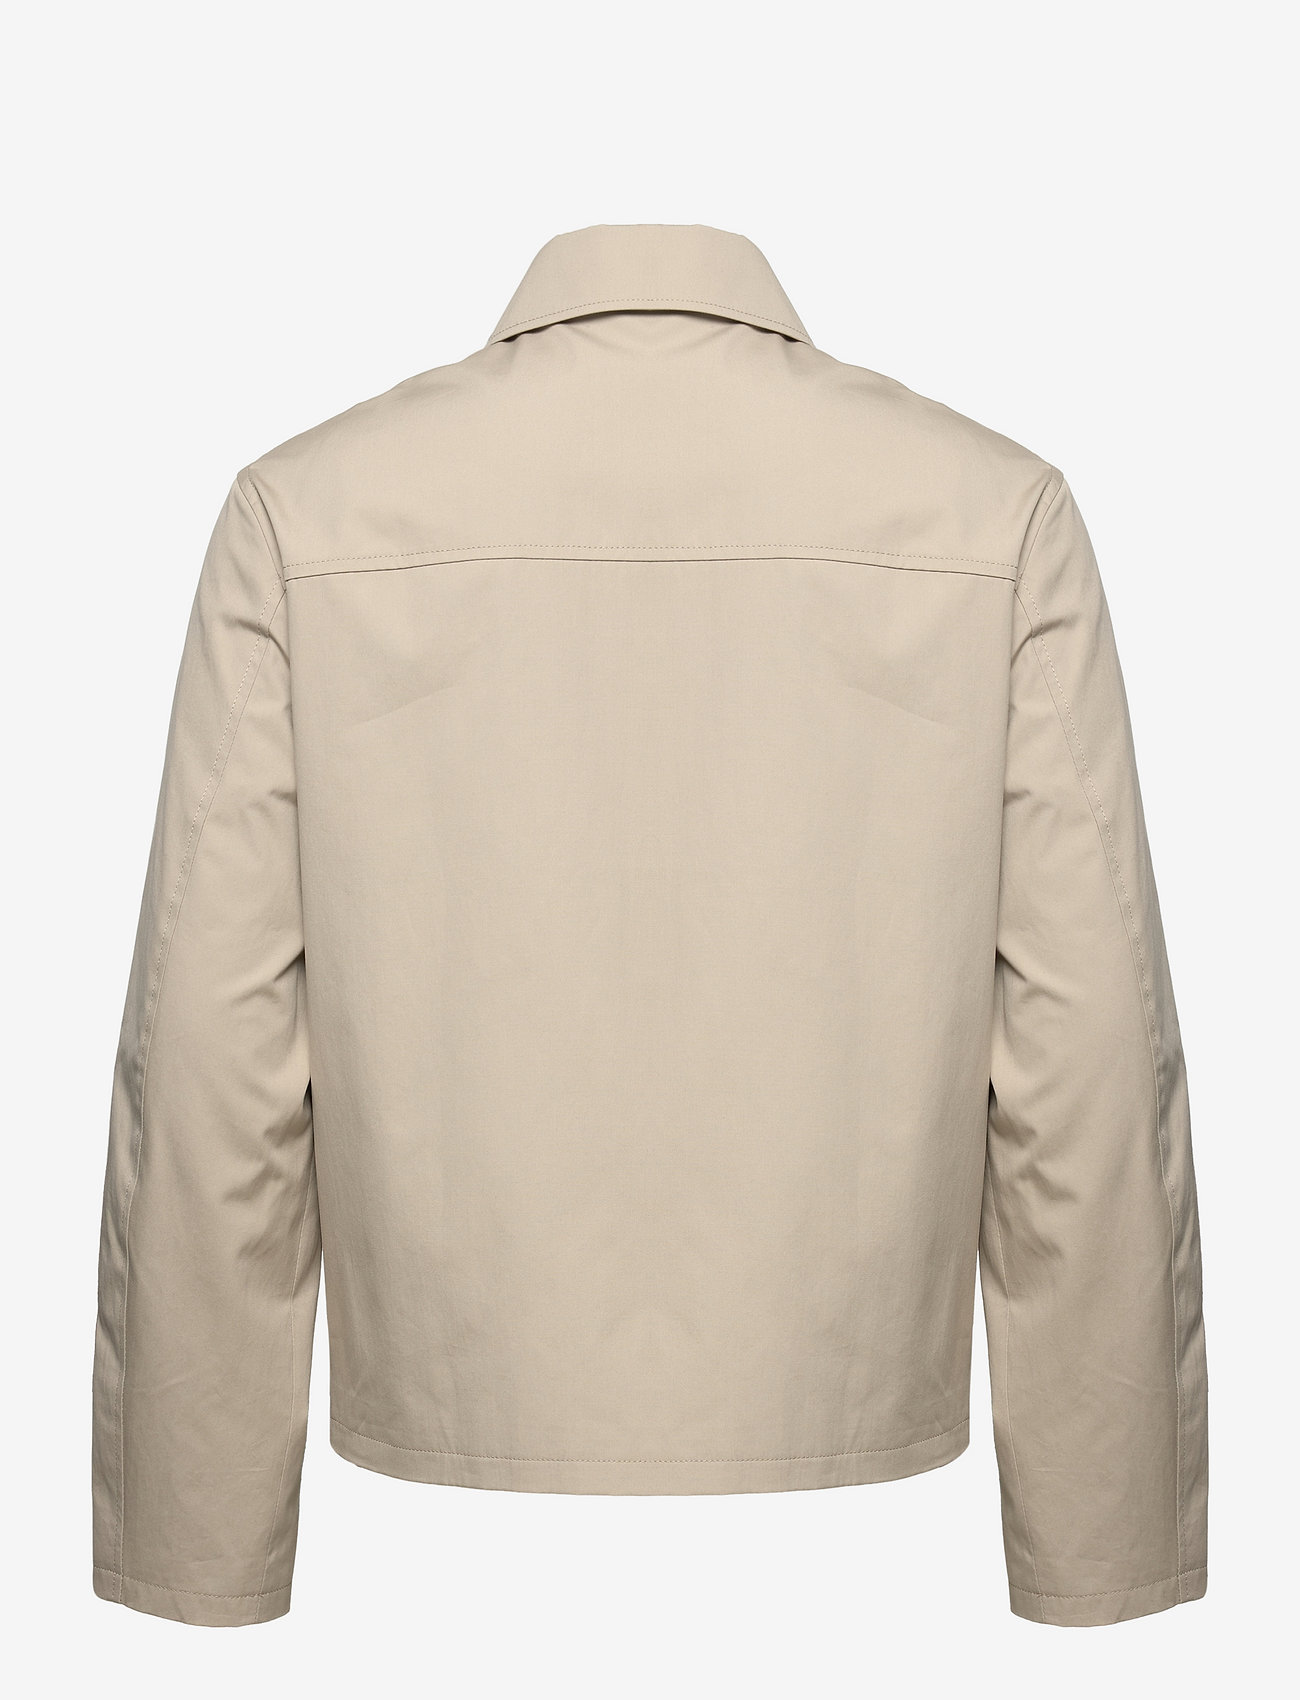 Filippa K - M. Patrick Cotton Jacket - spring jackets - grey beige - 1